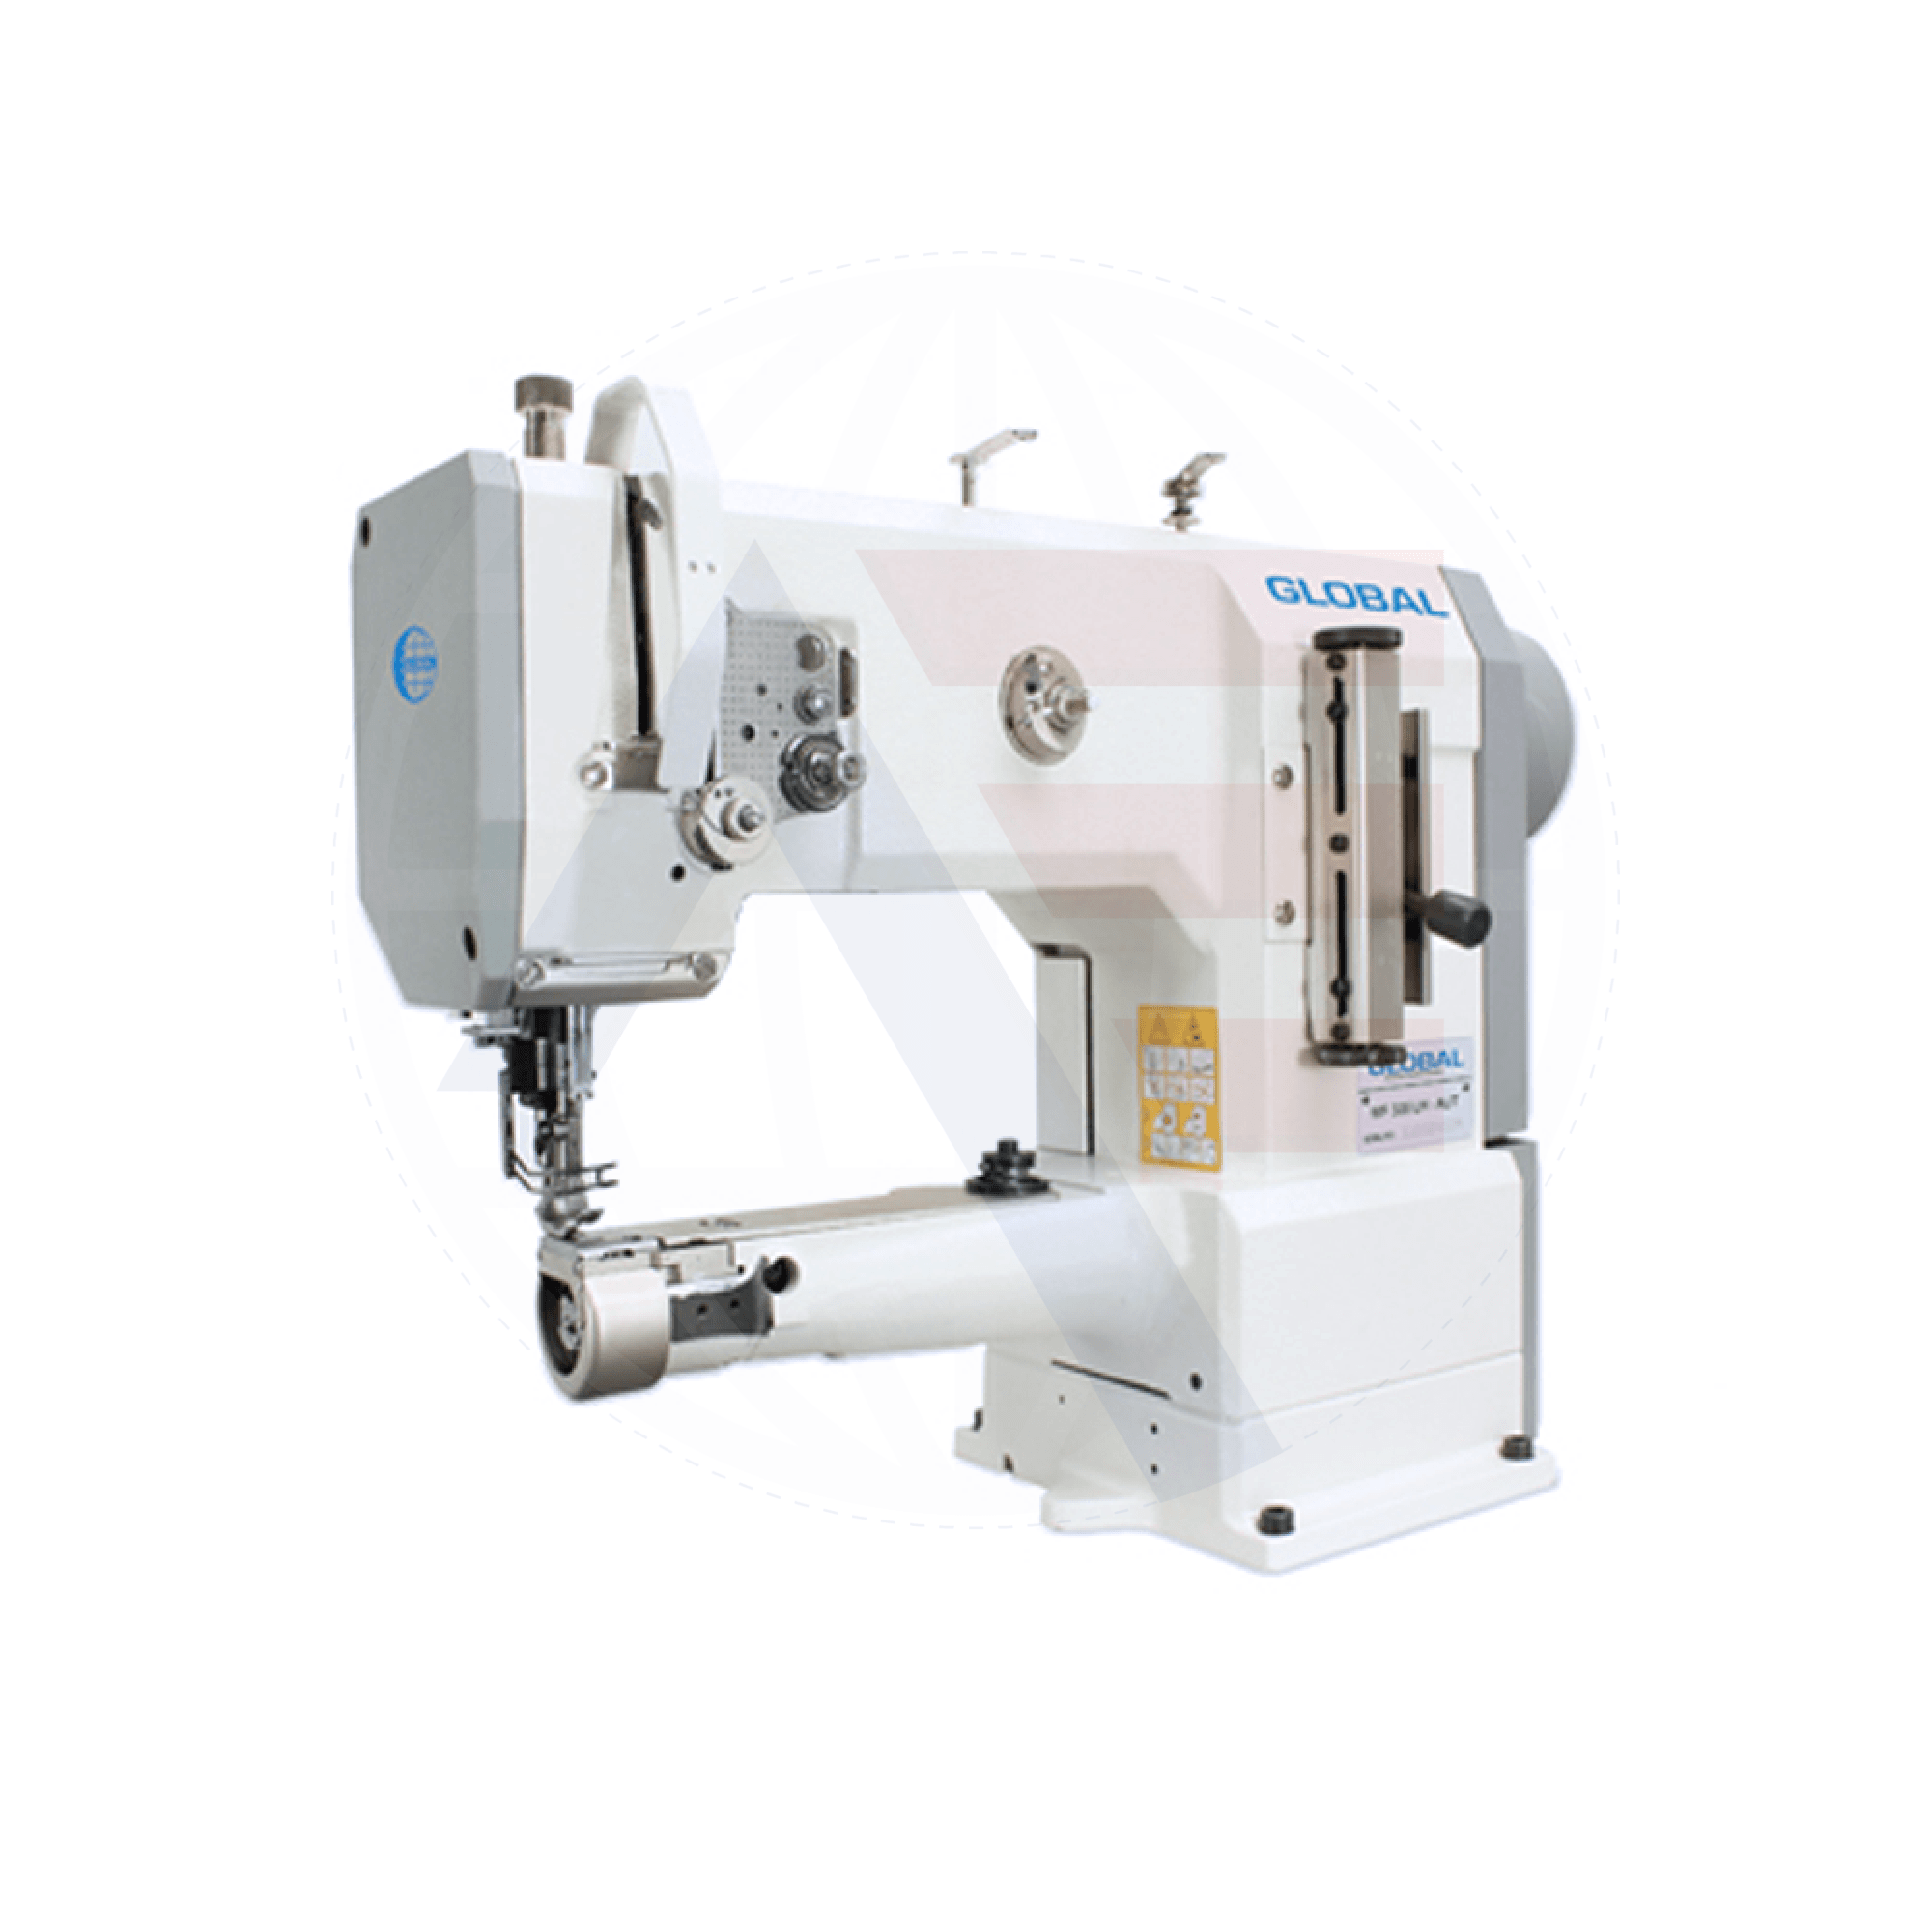 Global Wf 1335 Series Cylinder-Arm Walking-Foot Machine Sewing Machines